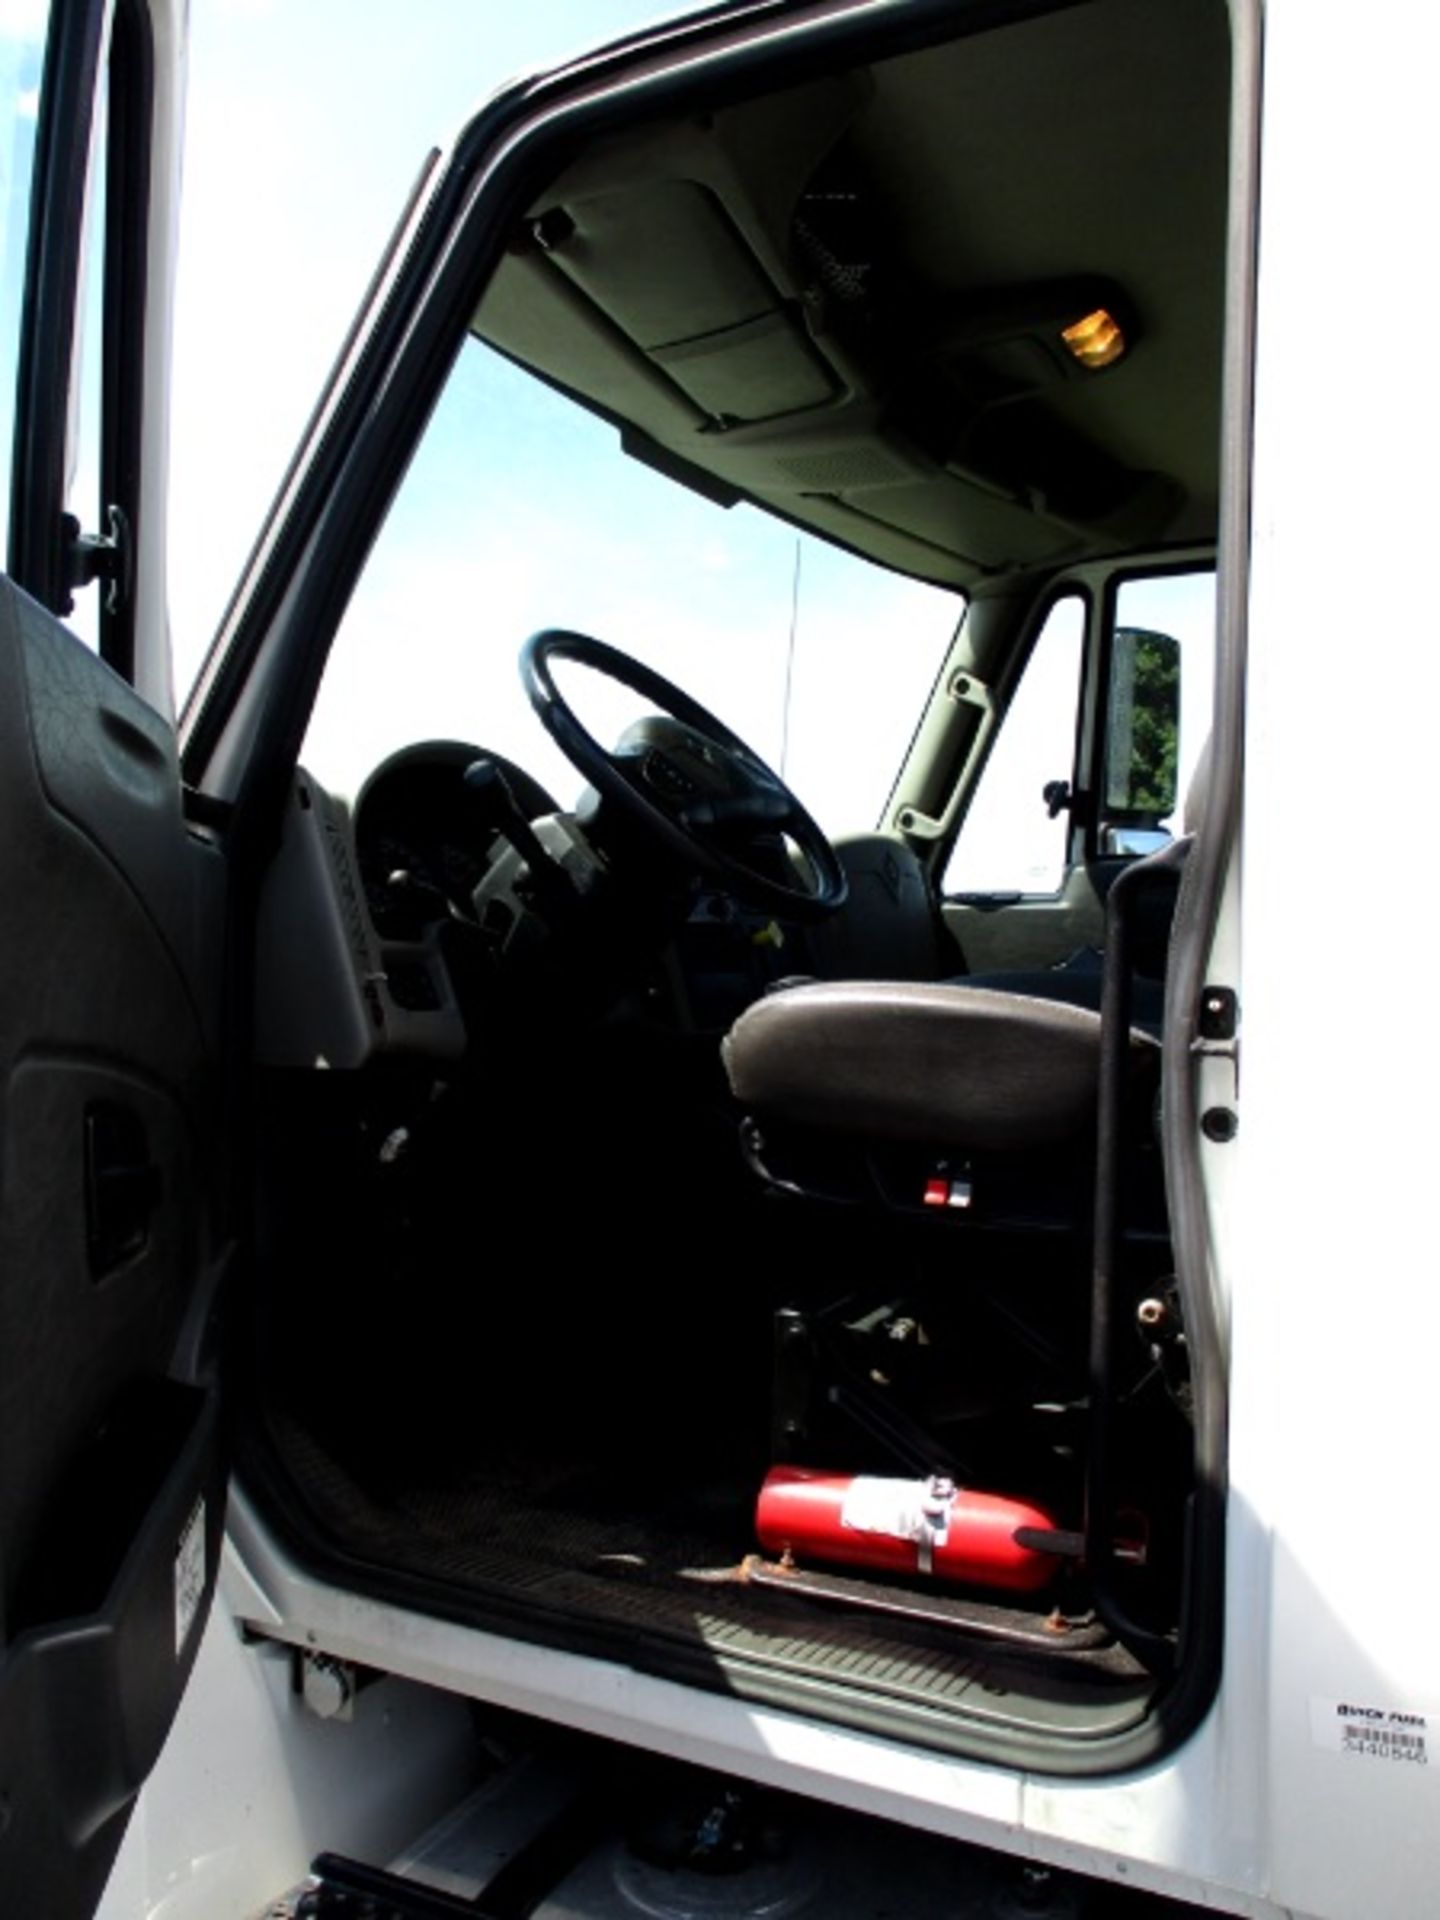 Navistar (Dura Star) #4300 SBA 4 x 2 Box Truck, New 2014, Diesel, Approx. 200,000 miles, Utilimaster - Image 8 of 10